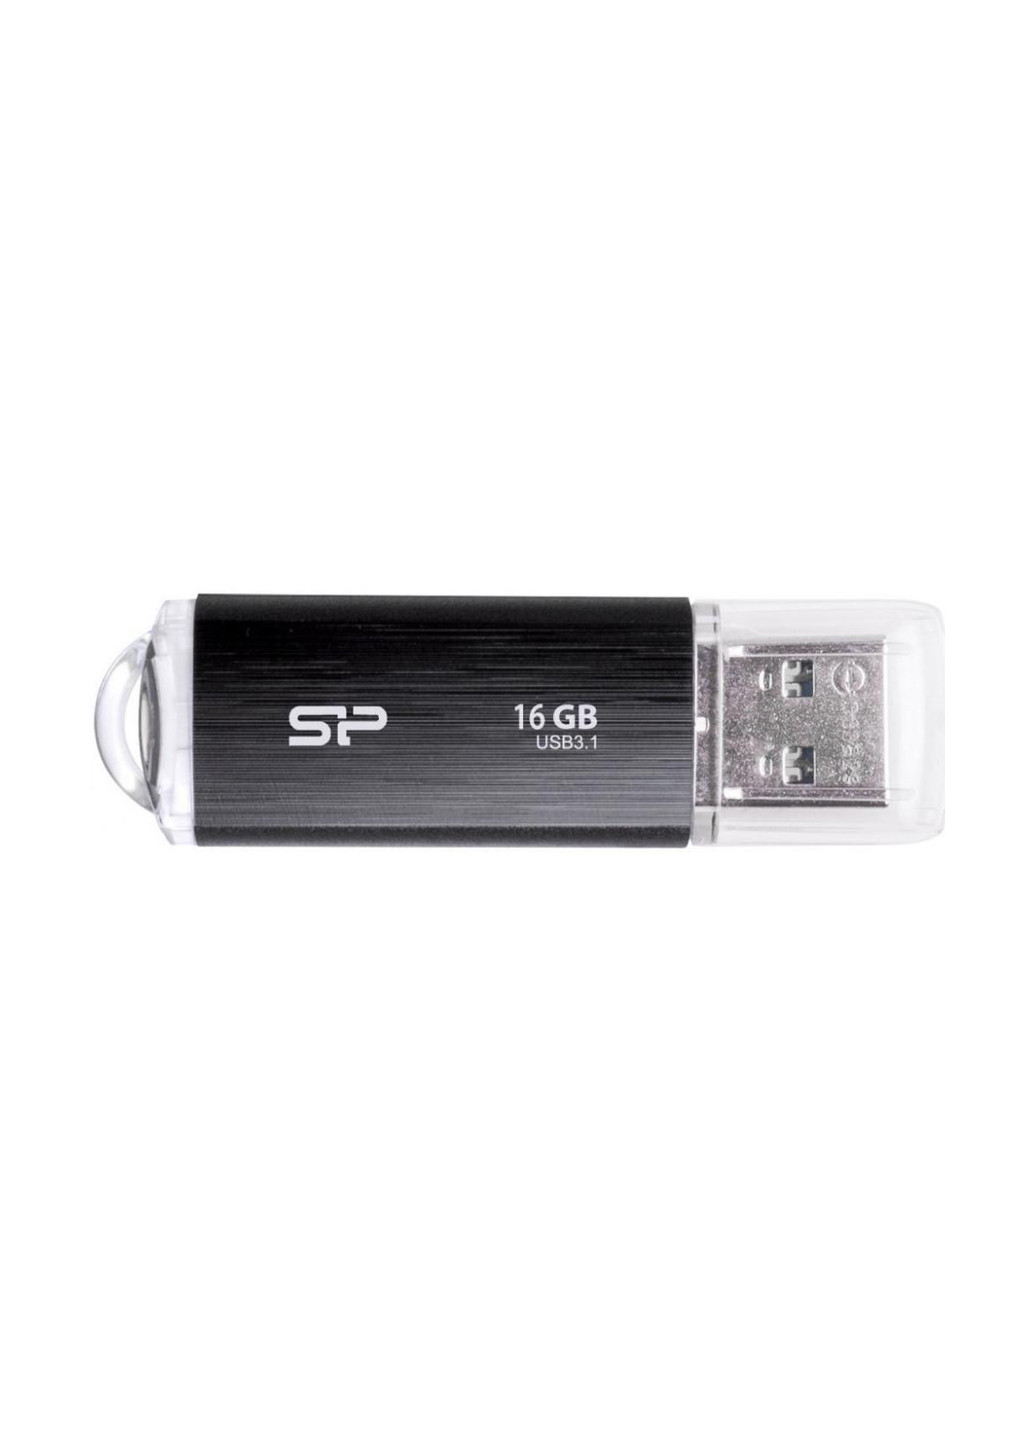 Флеш пам'ять USB Blaze B02 16GB USB 3.0 Black (SP016GBUF3B02V1K) Silicon Power флеш память usb silicon power blaze b02 16gb usb 3.0 black (sp016gbuf3b02v1k) (132007719)